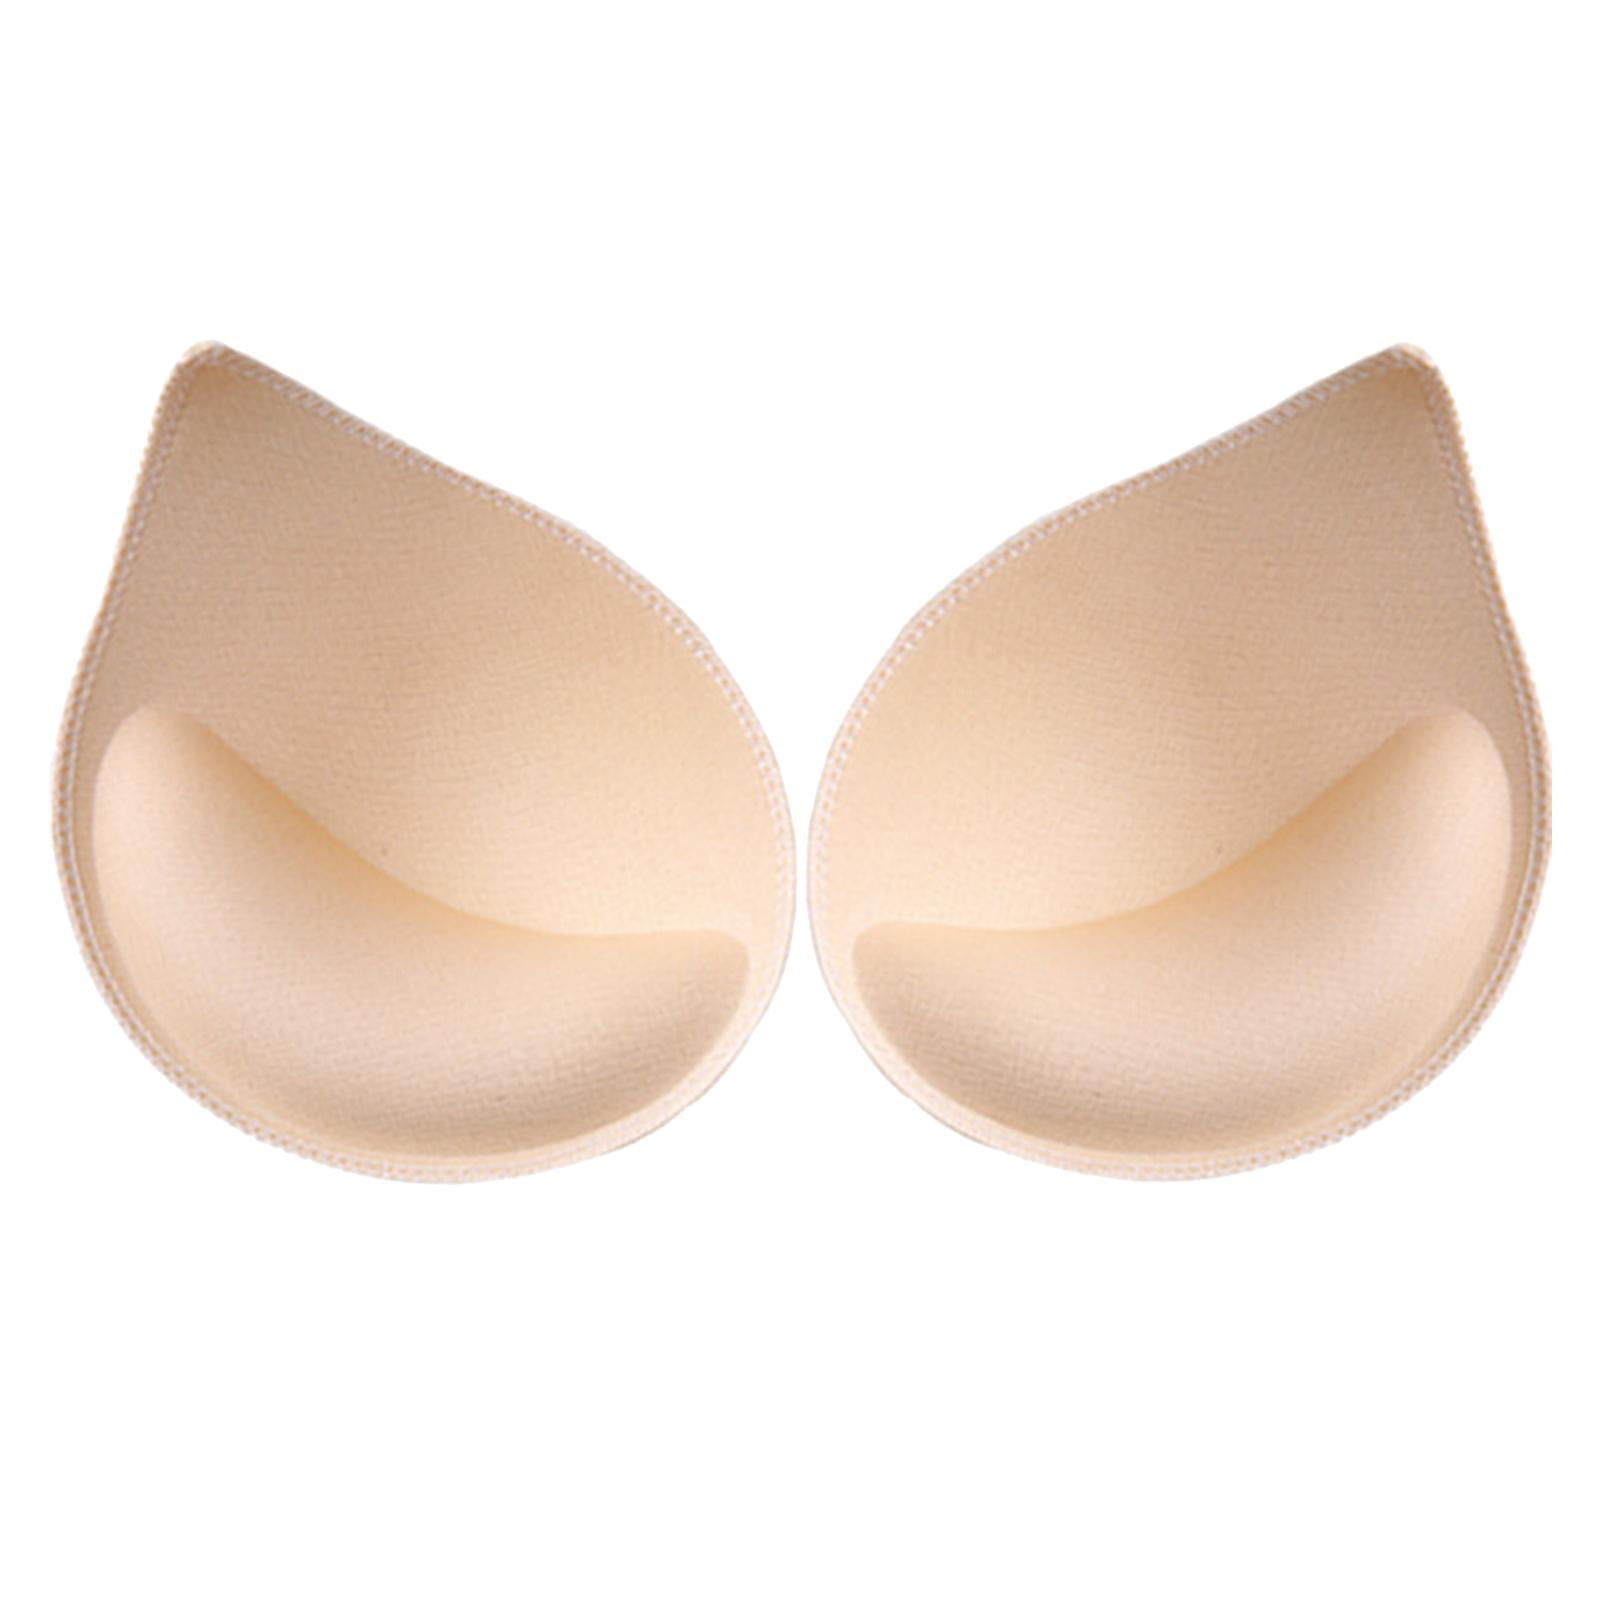 5 Pairs Women Breathable Round Push Up Bra Pads Inserts Padded Sponge Breast  6